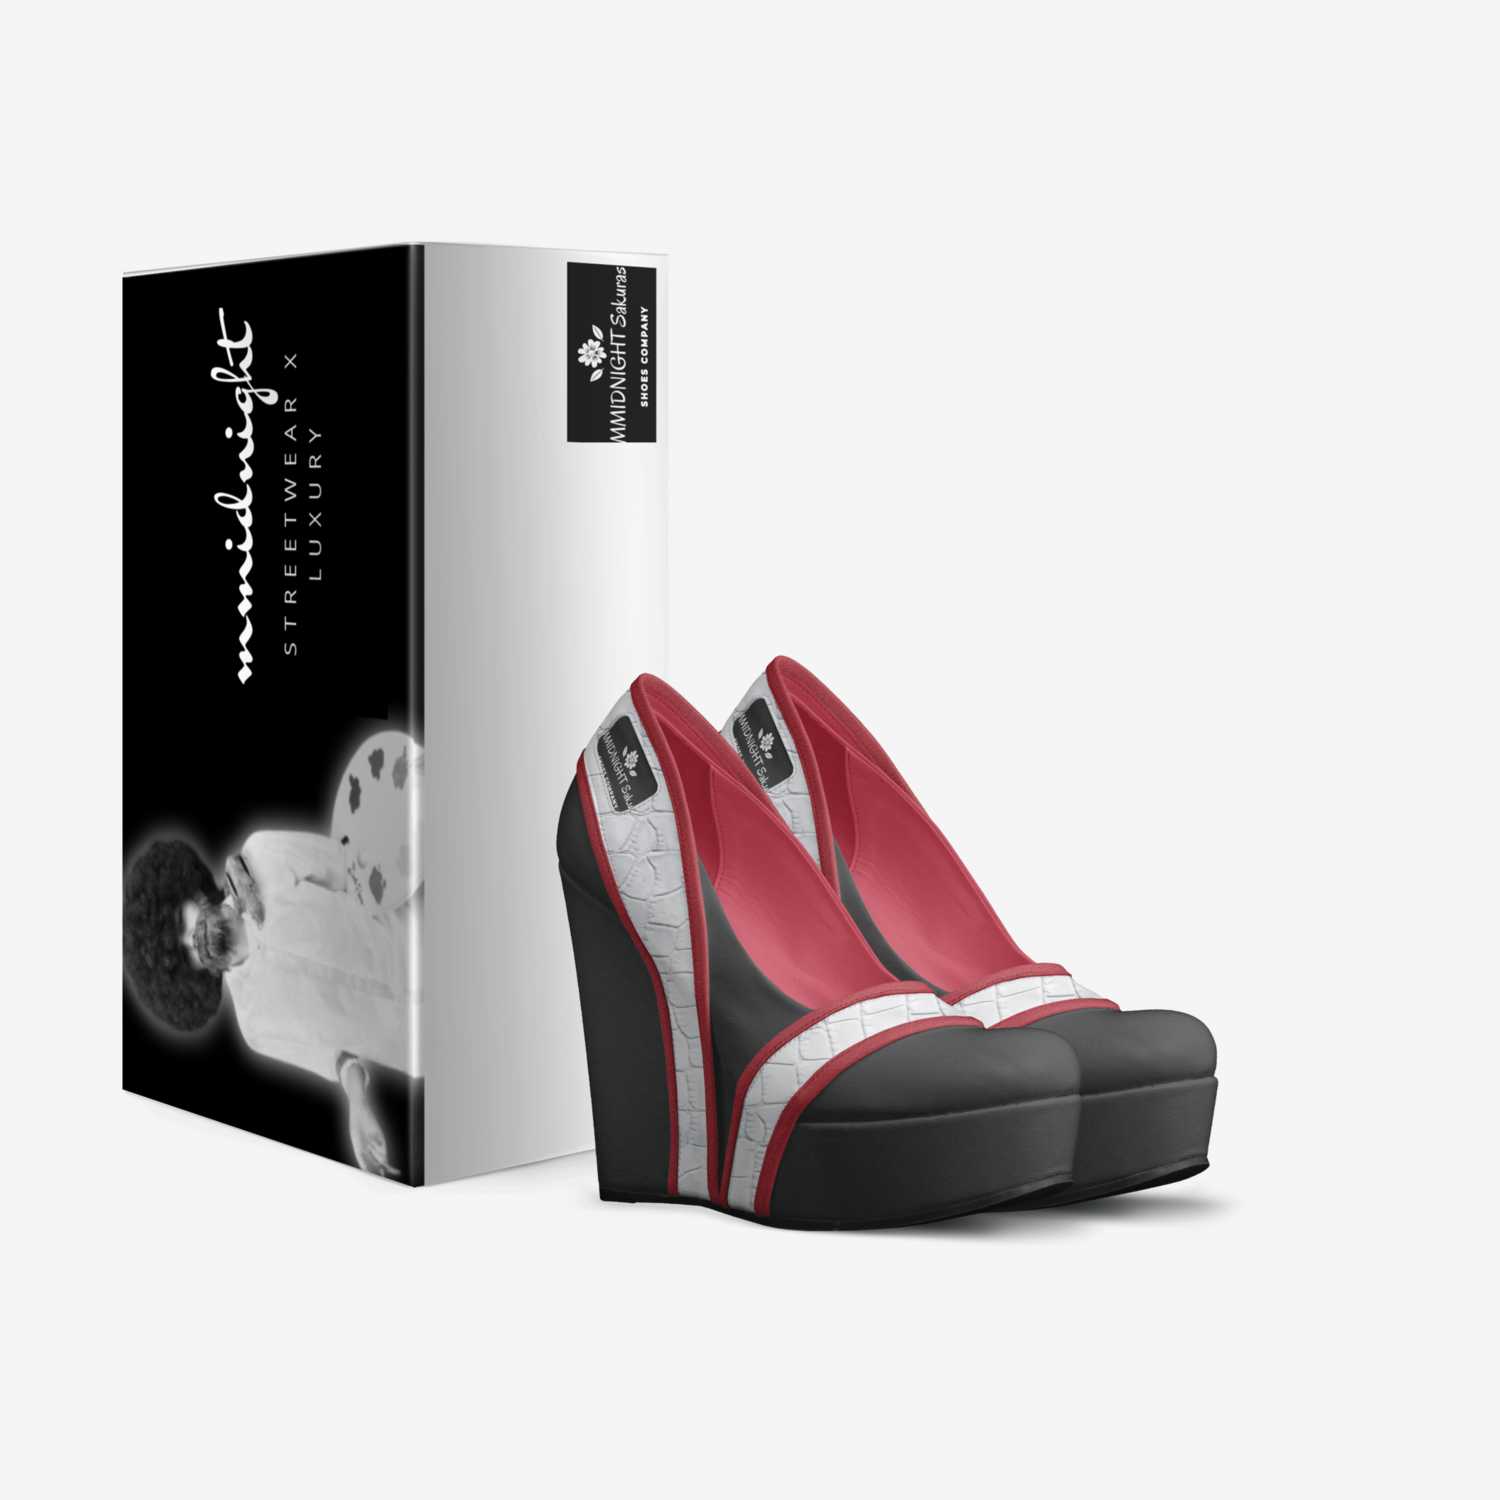 MMIDNIGHT Sakuras custom made in Italy shoes by Braxton Kennedy | Box view